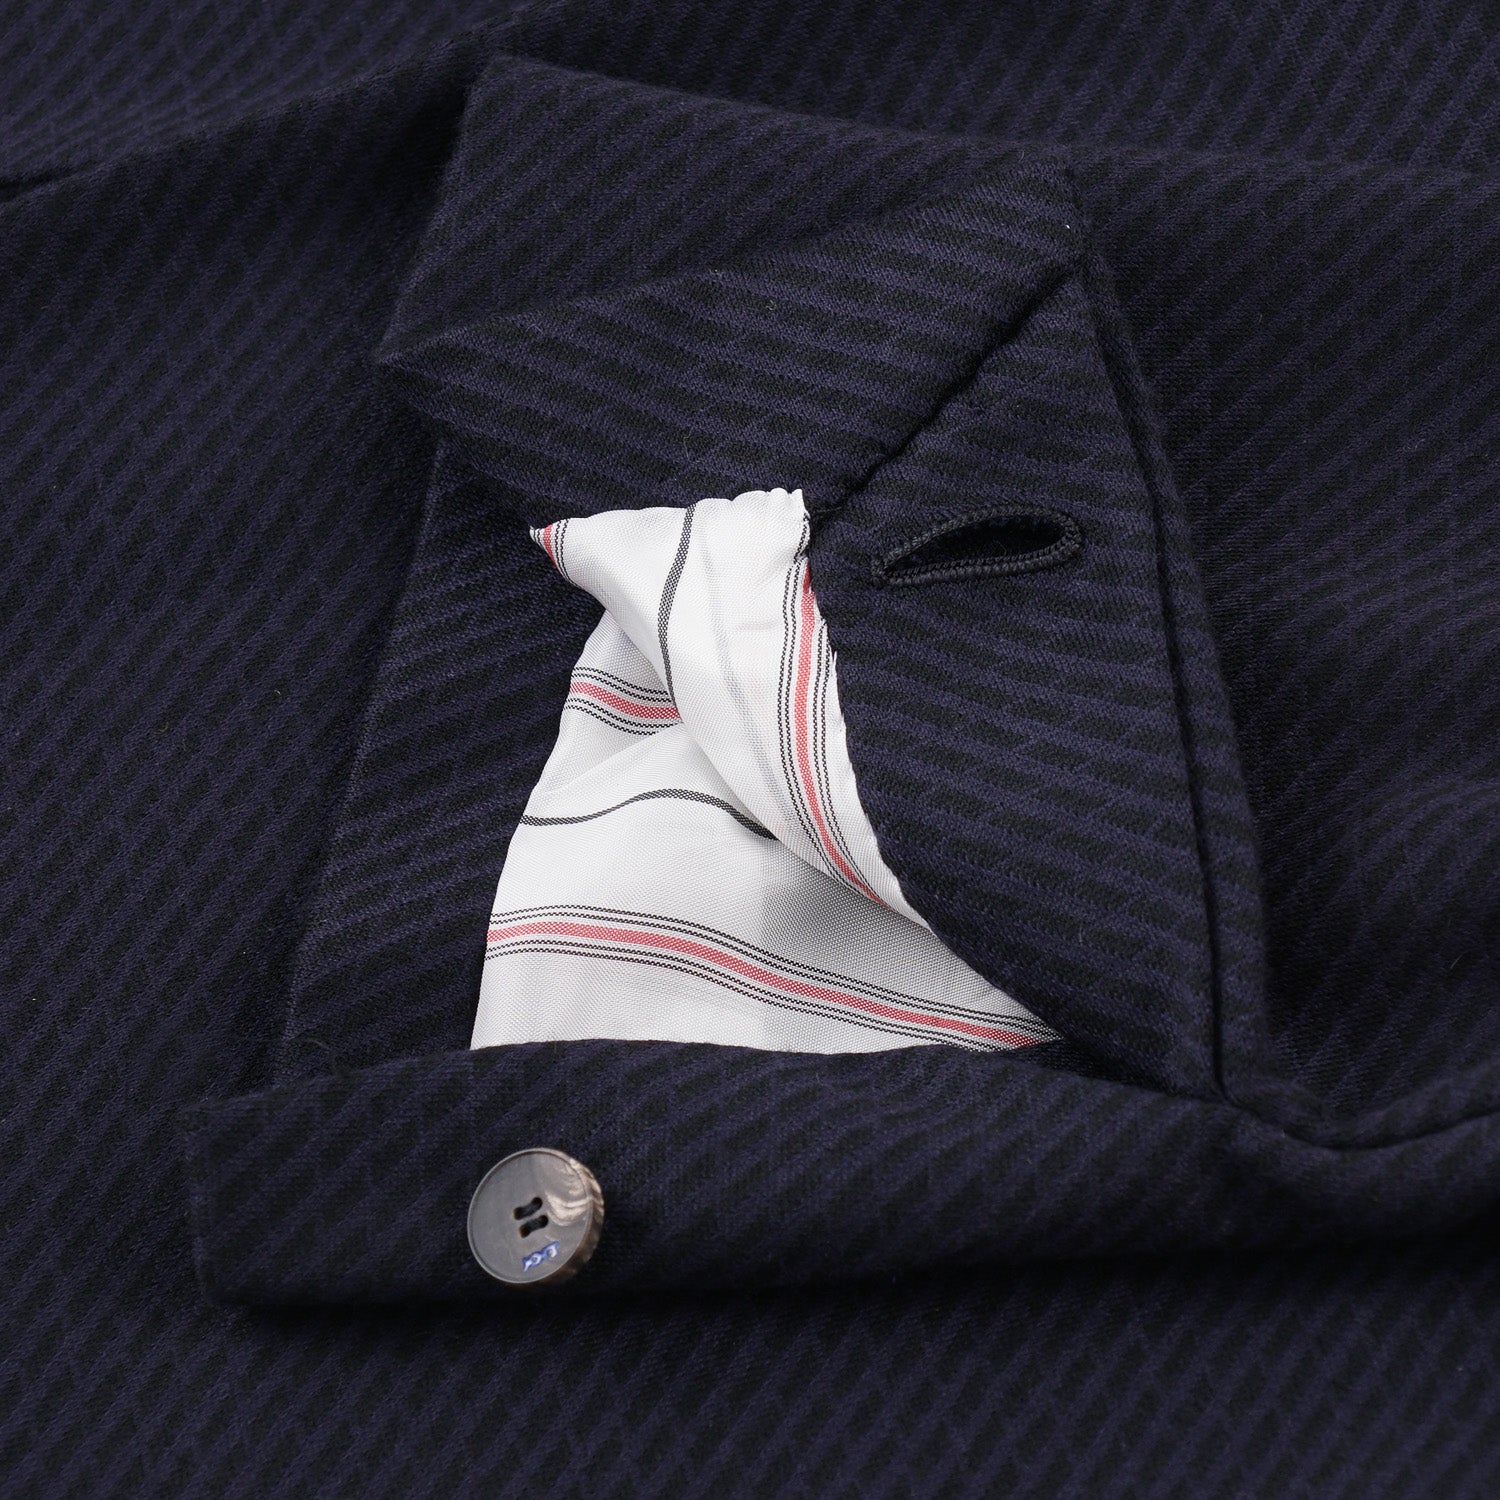 Kiton KNT Jersey Cashmere Sport Coat - Top Shelf Apparel